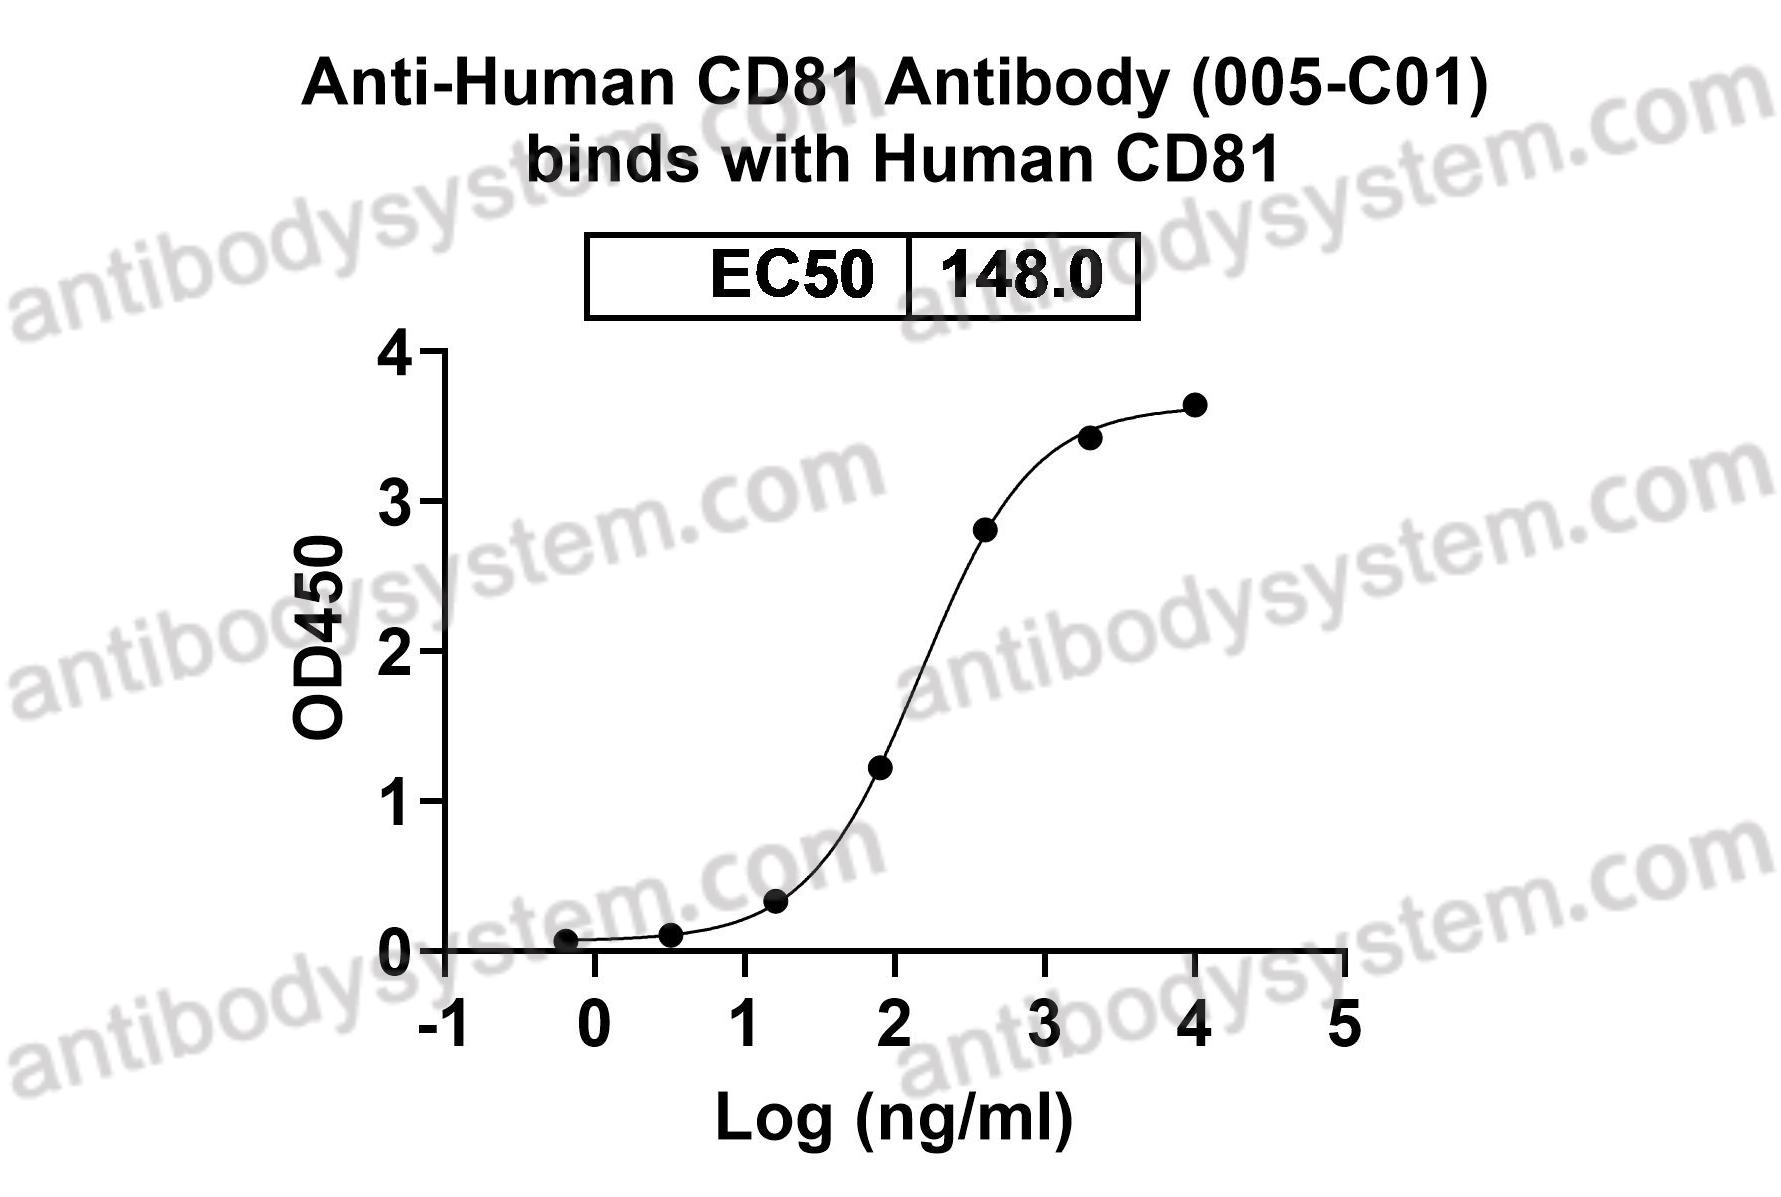 Anti-Human CD81 Antibody (005-C01)